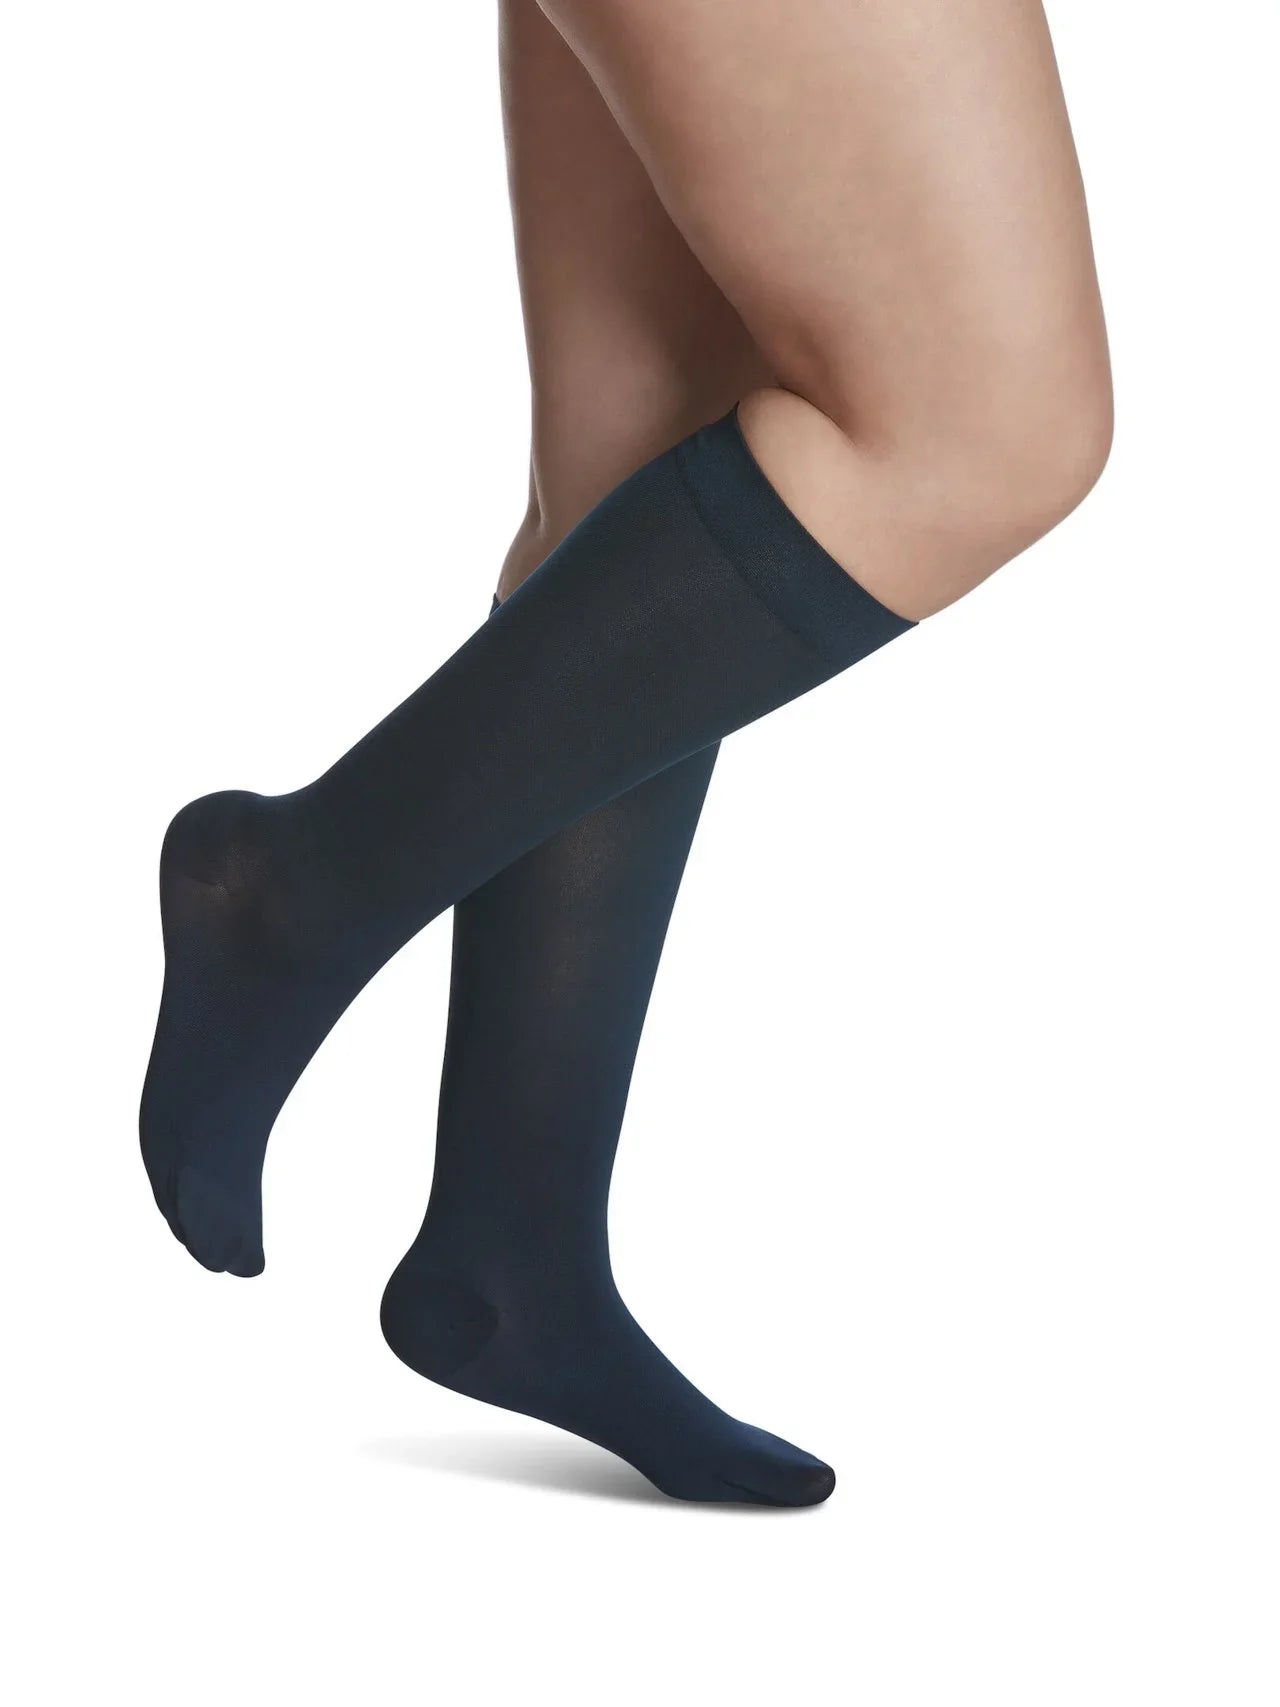 Sigvaris 840 Soft Opaque Compression Socks 15-20 mmHg Calf High for Female Closed Toe